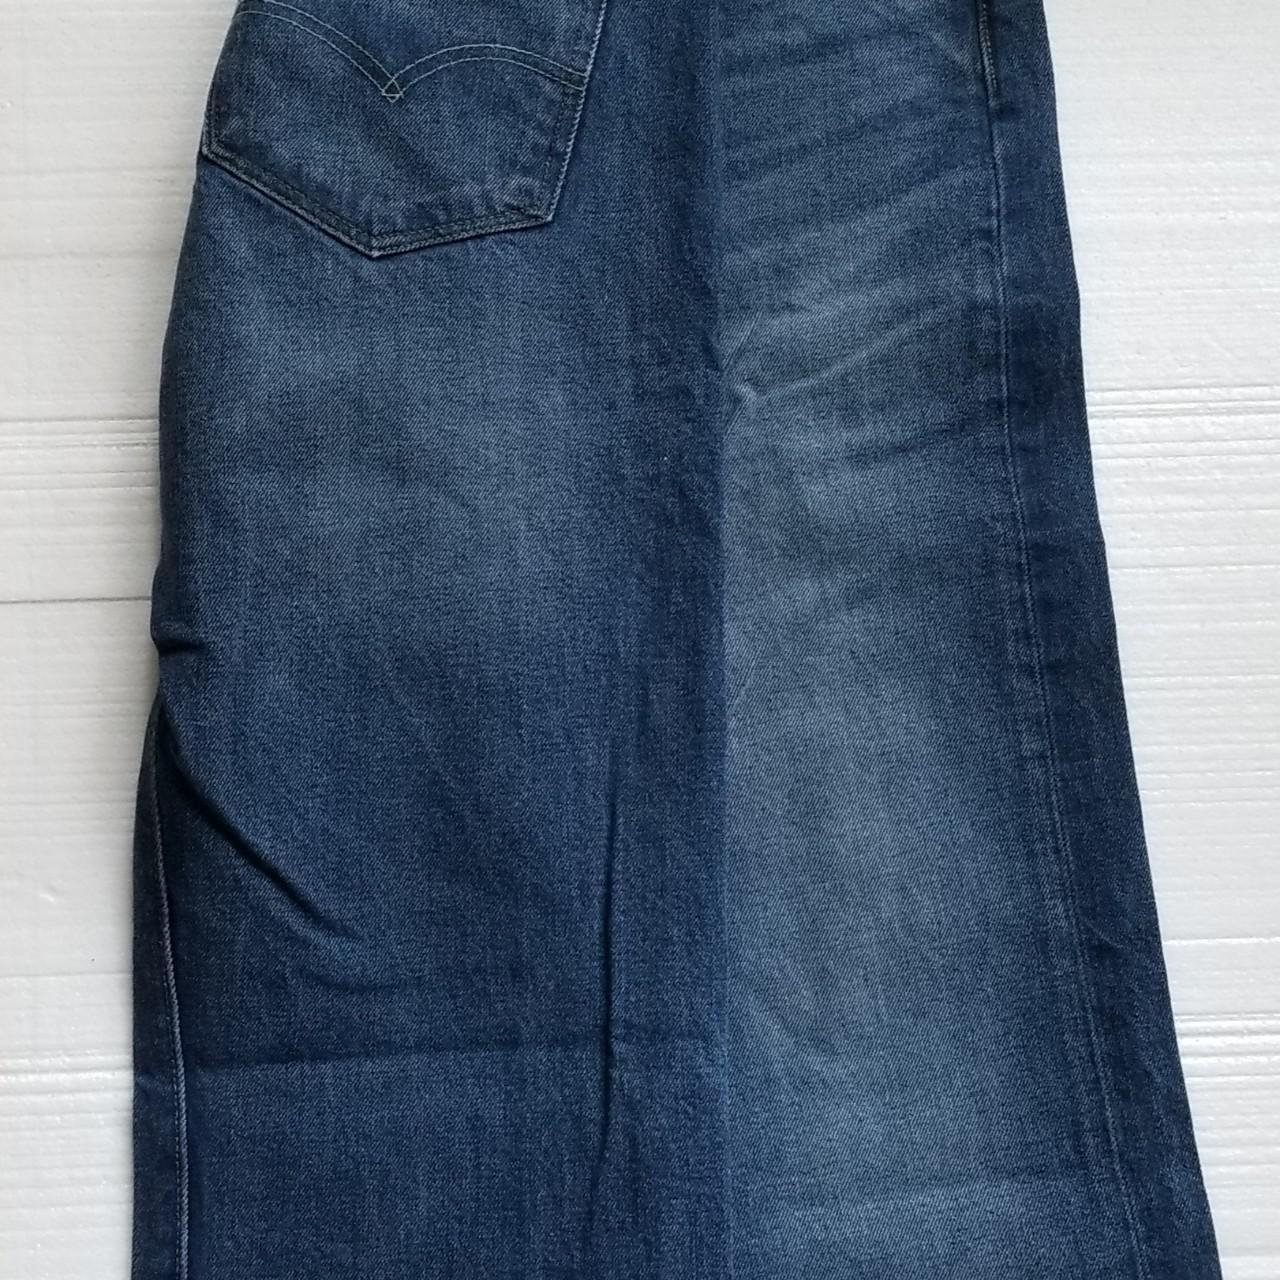 Levi's 501 Straight Leg 36x30 Blue Jeans Original - Depop